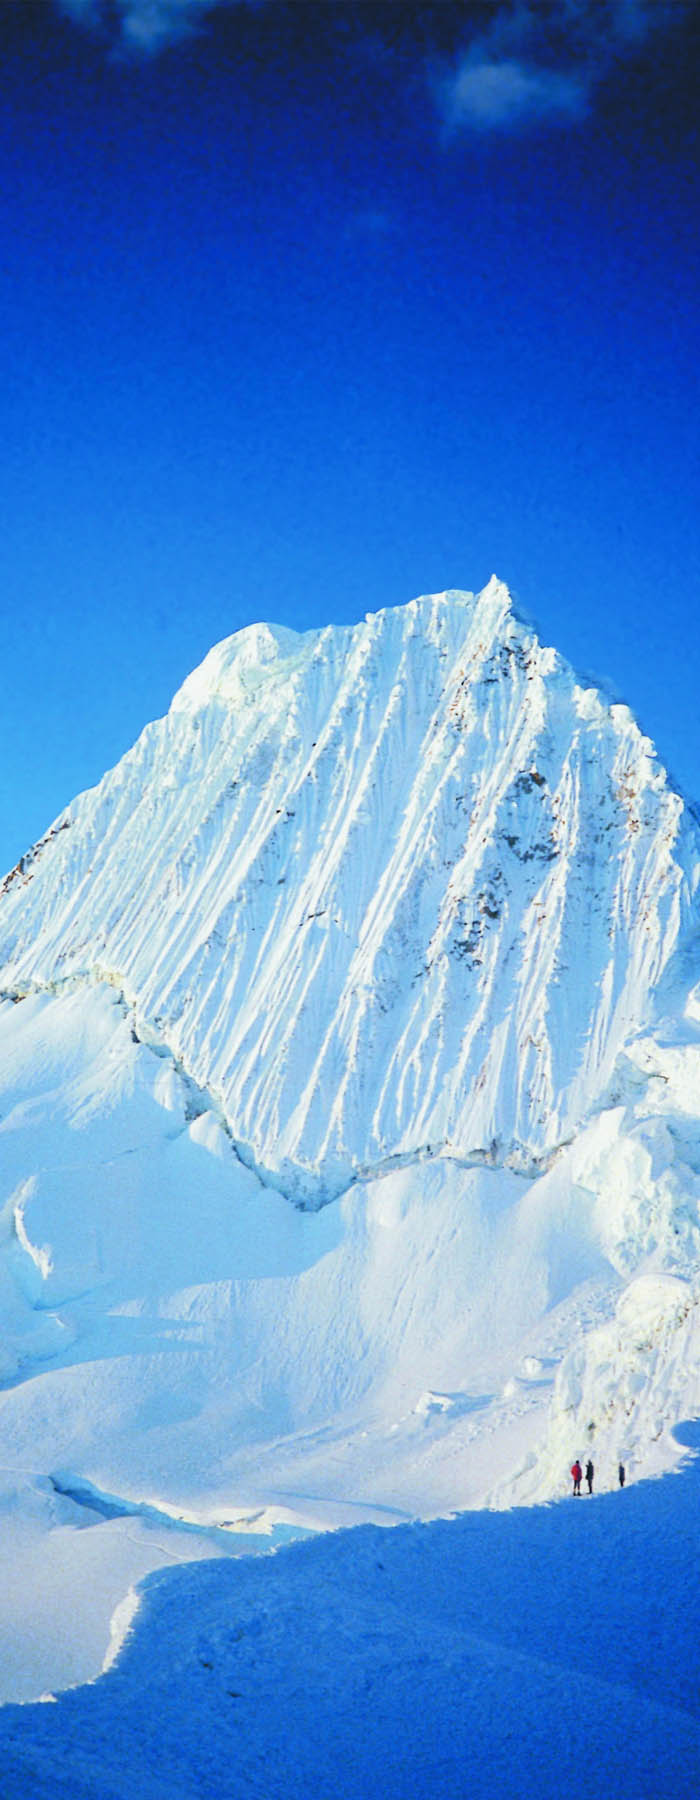 Alpamayo, a snowcapped mountain in Peru